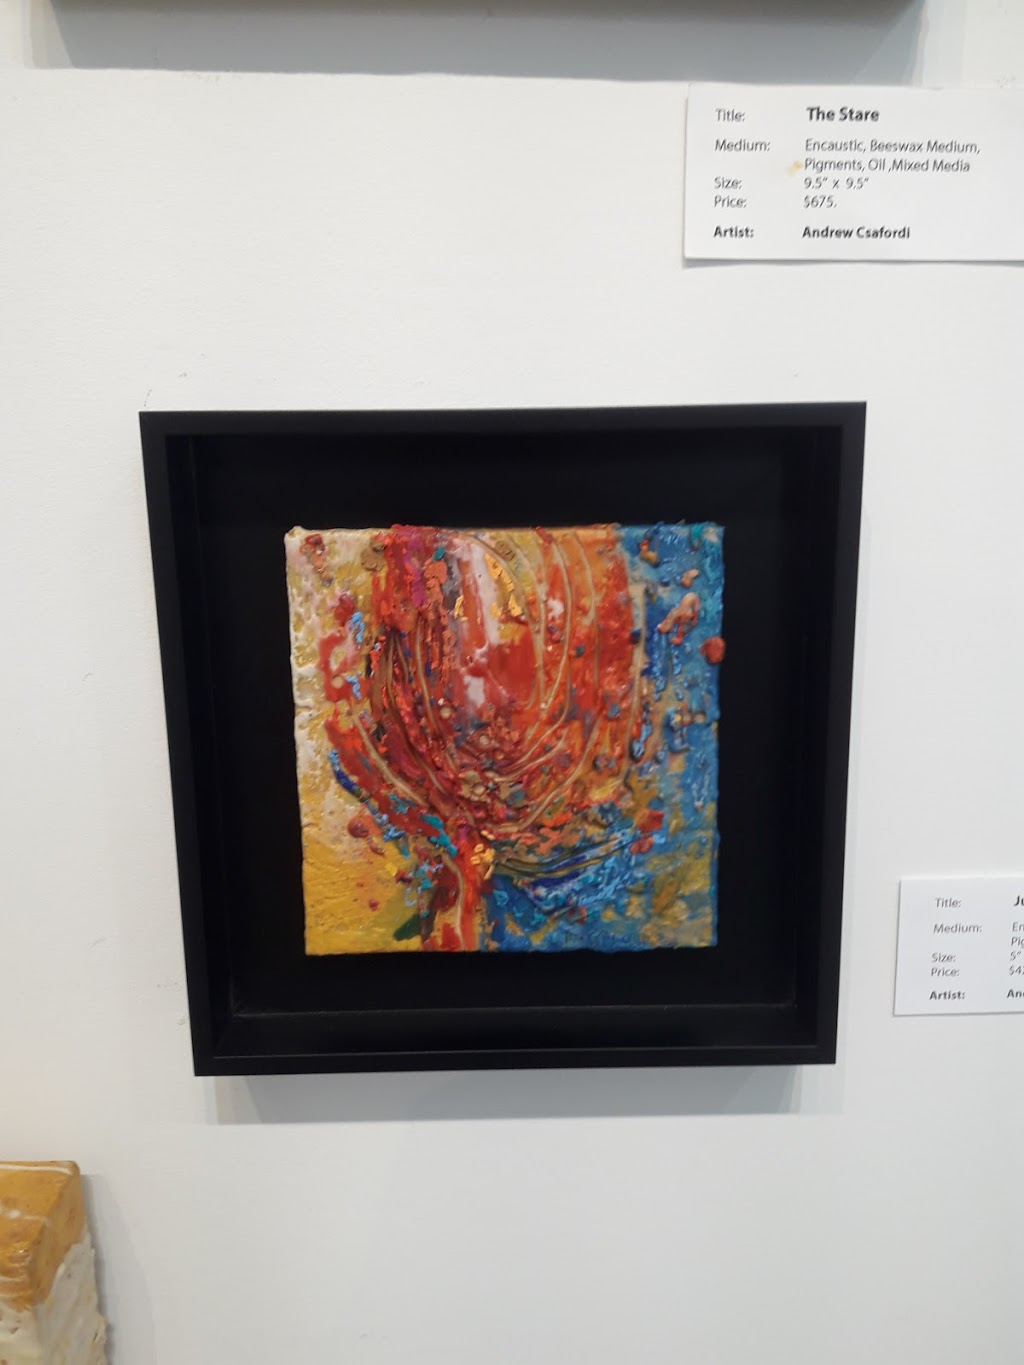 ANDARA Gallery | 54 Wilson Rd, Bloomfield, ON K0K 1G0, Canada | Phone: (613) 393-1572